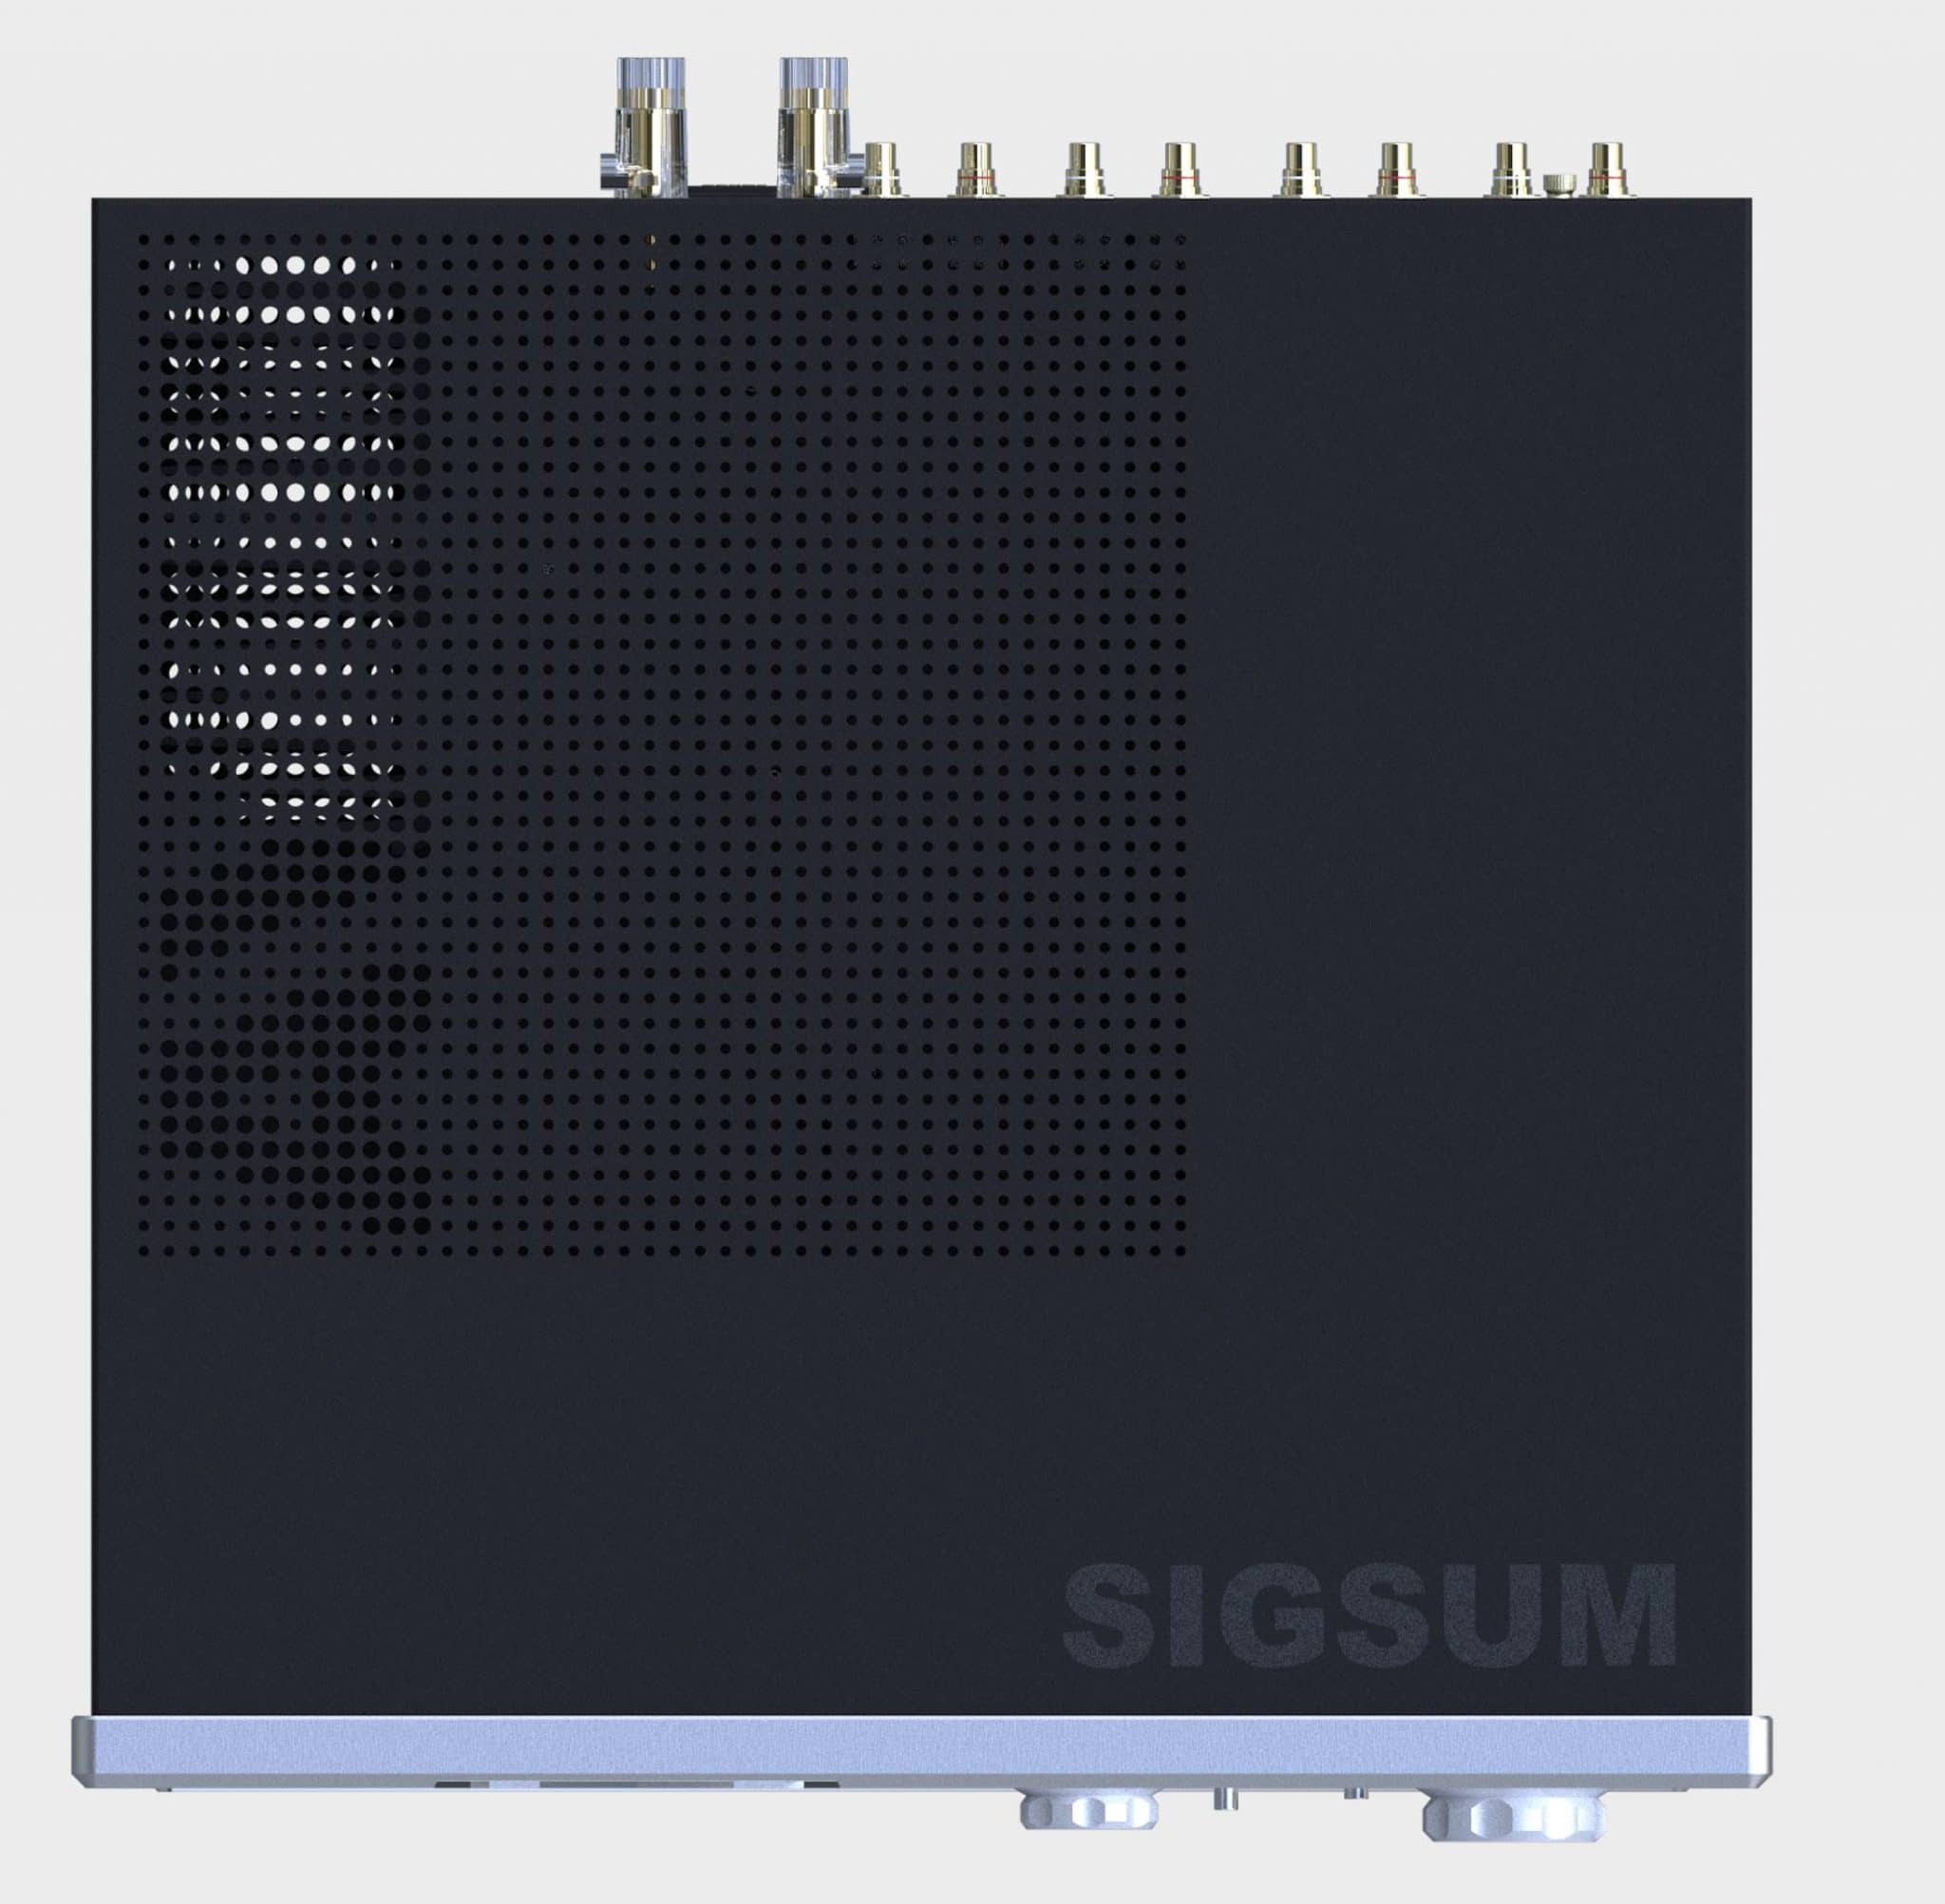 Sigsum Integrated Amplifier From AVID